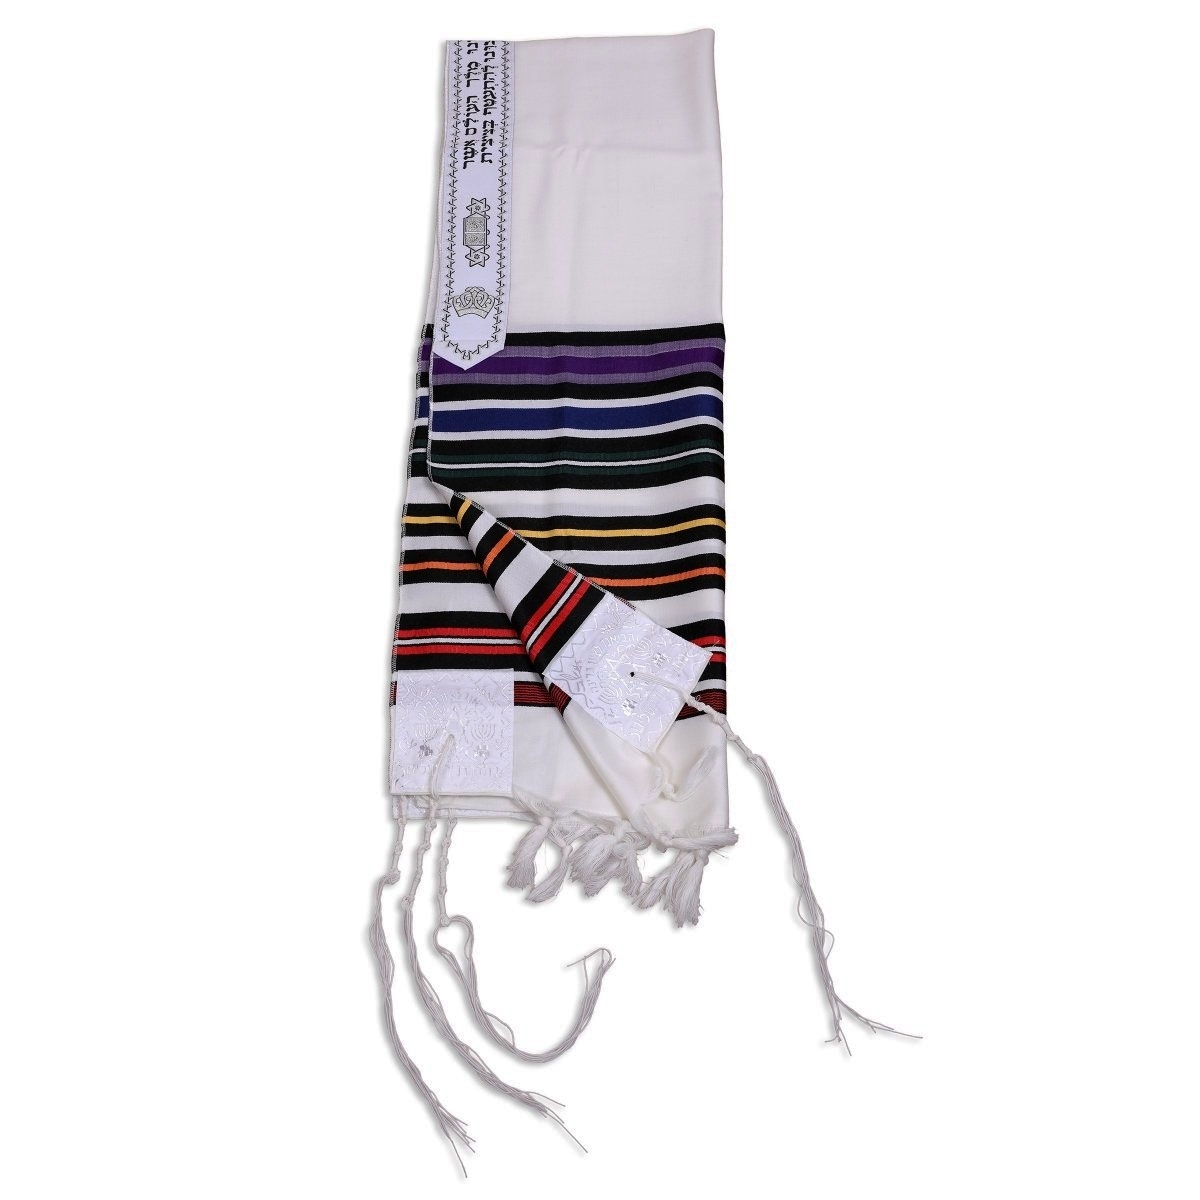 Bnei Or Multicolored Prayer Shawl  - 1